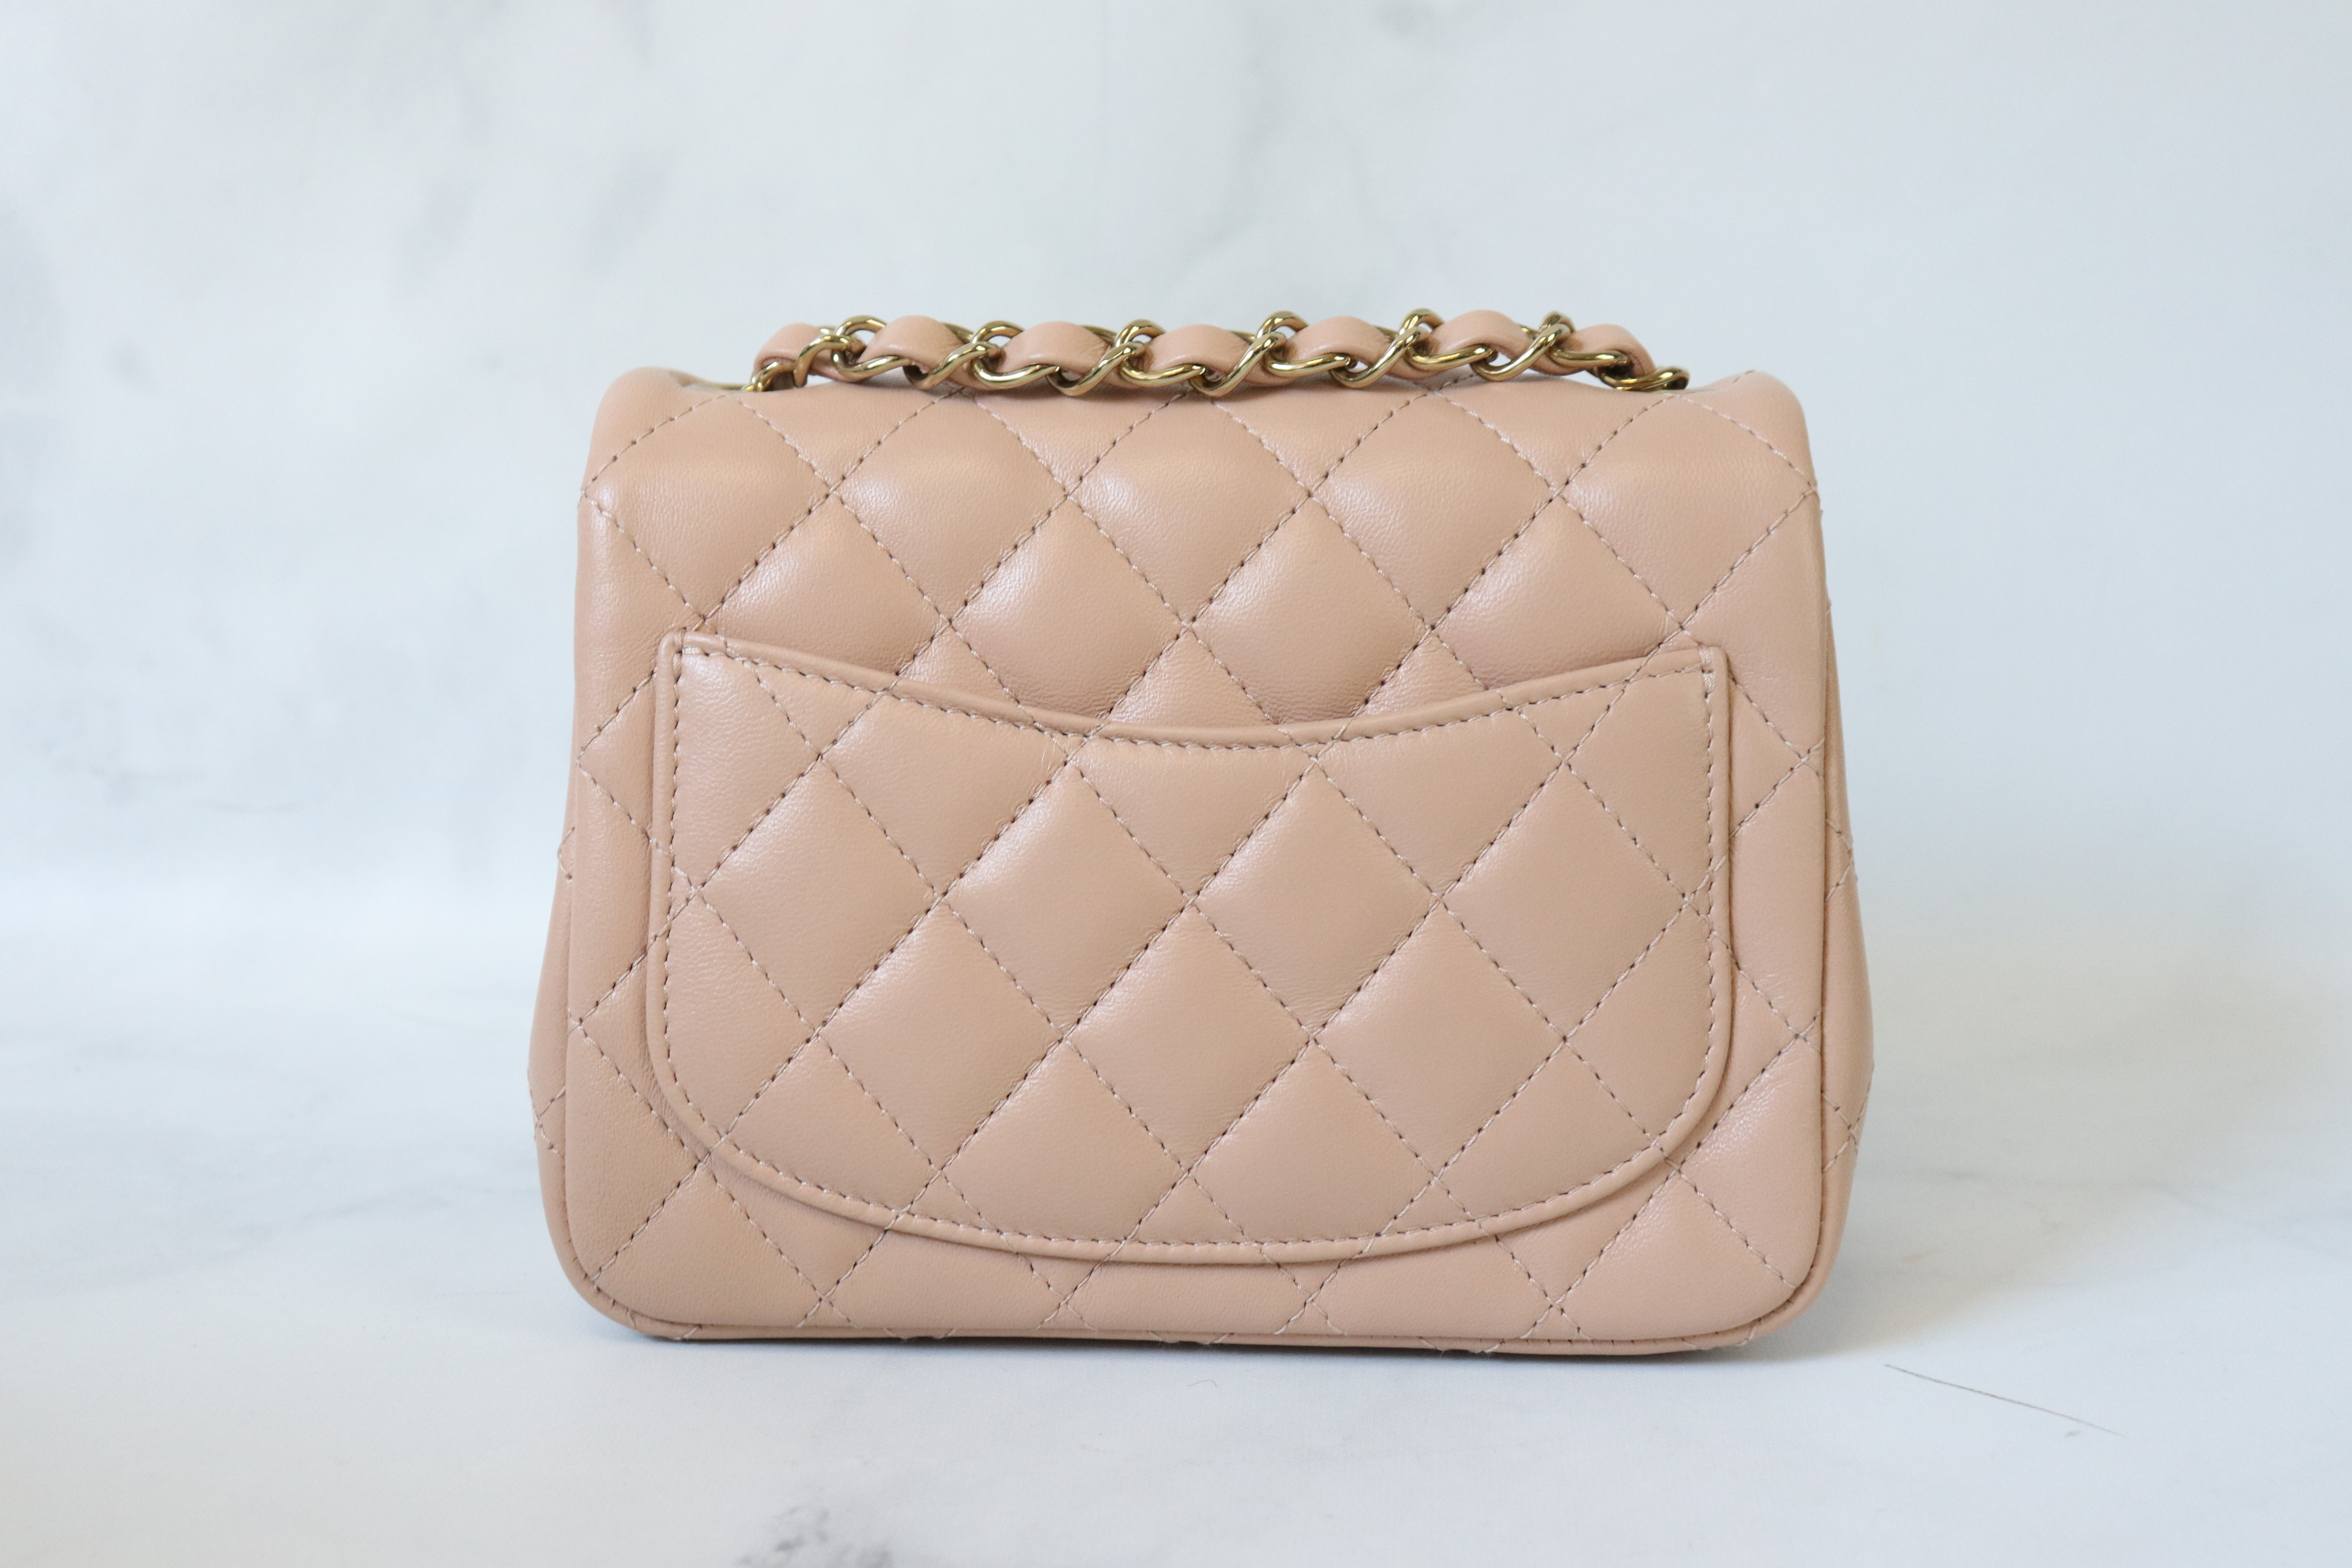 Chanel Mini Classic Flap, Lambskin Leather, 21A Beige, New in box